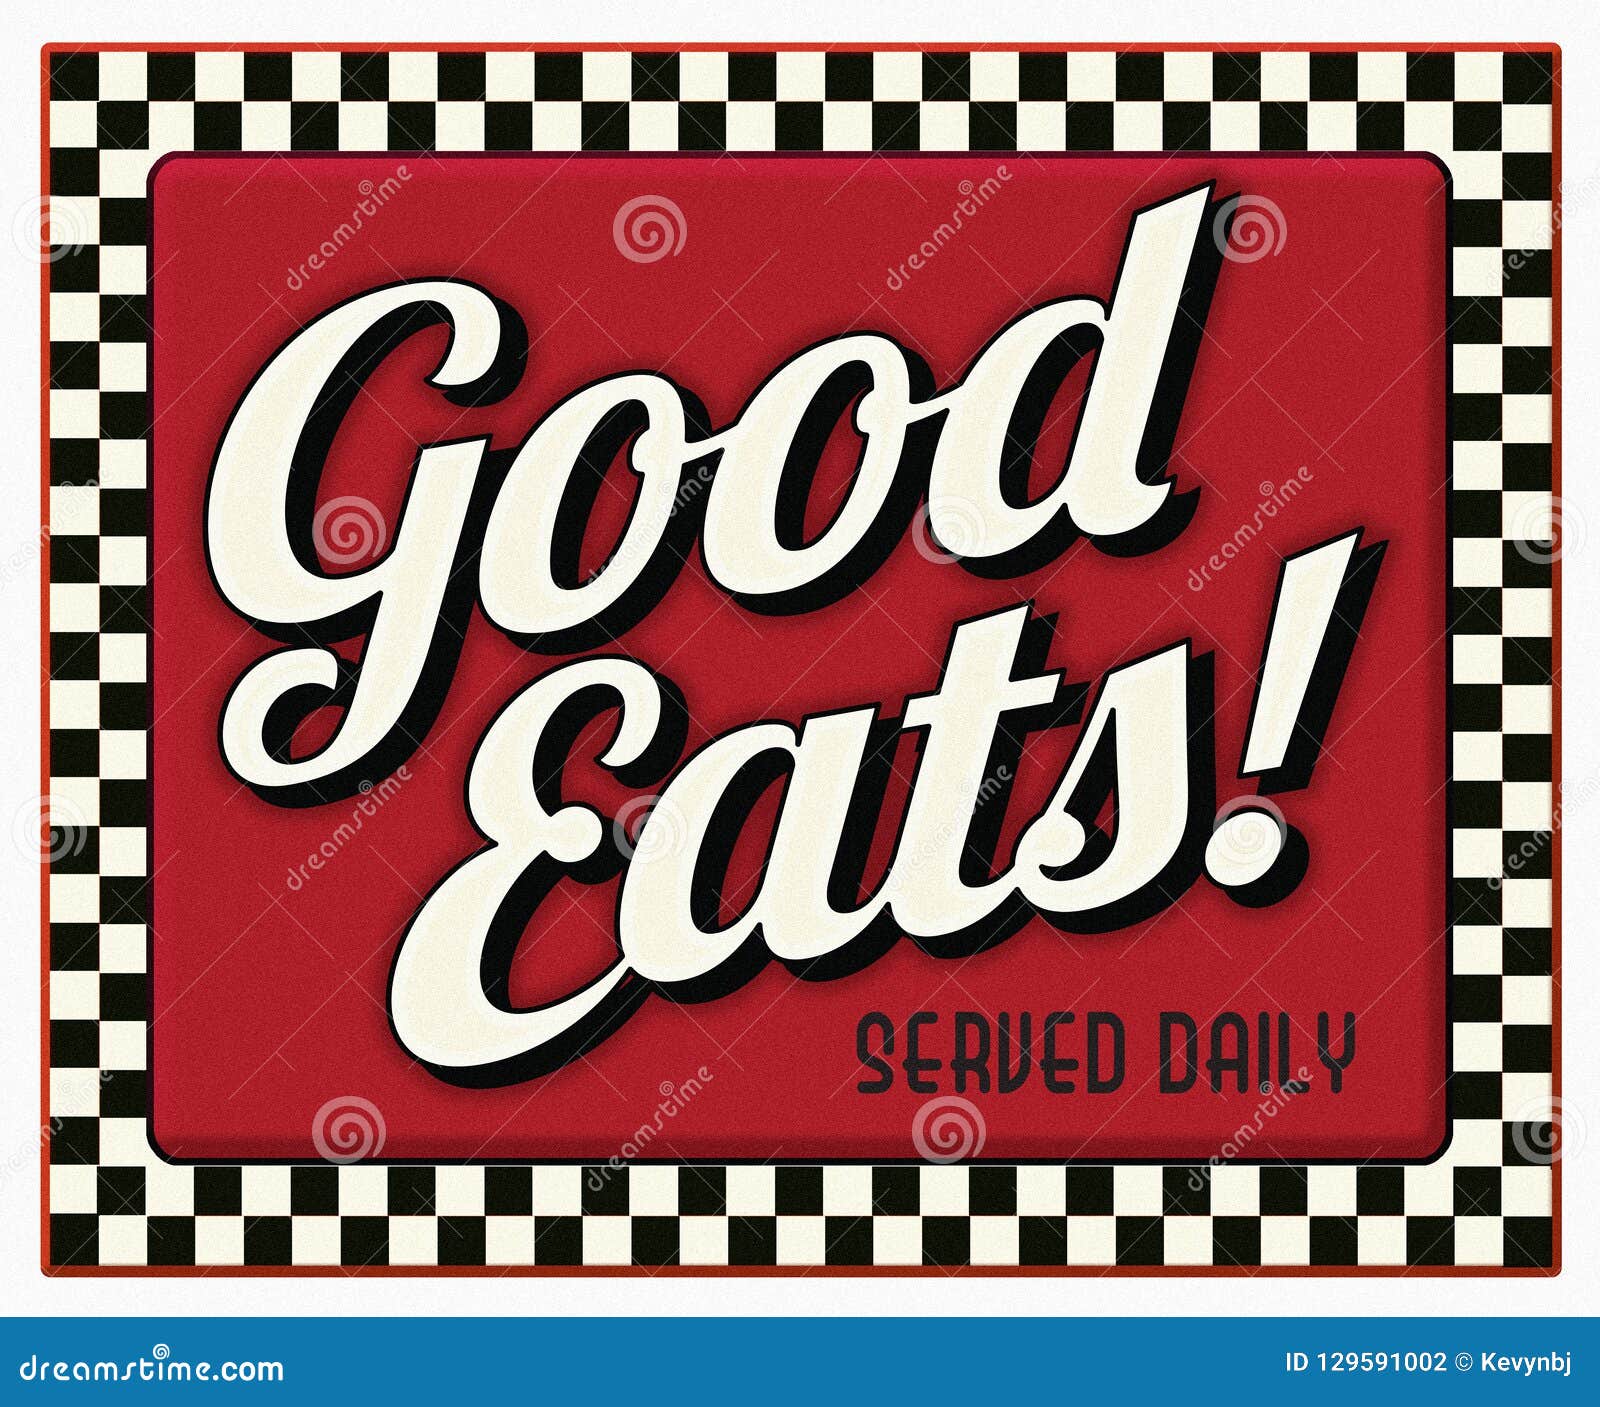 good eats served daily diner sign